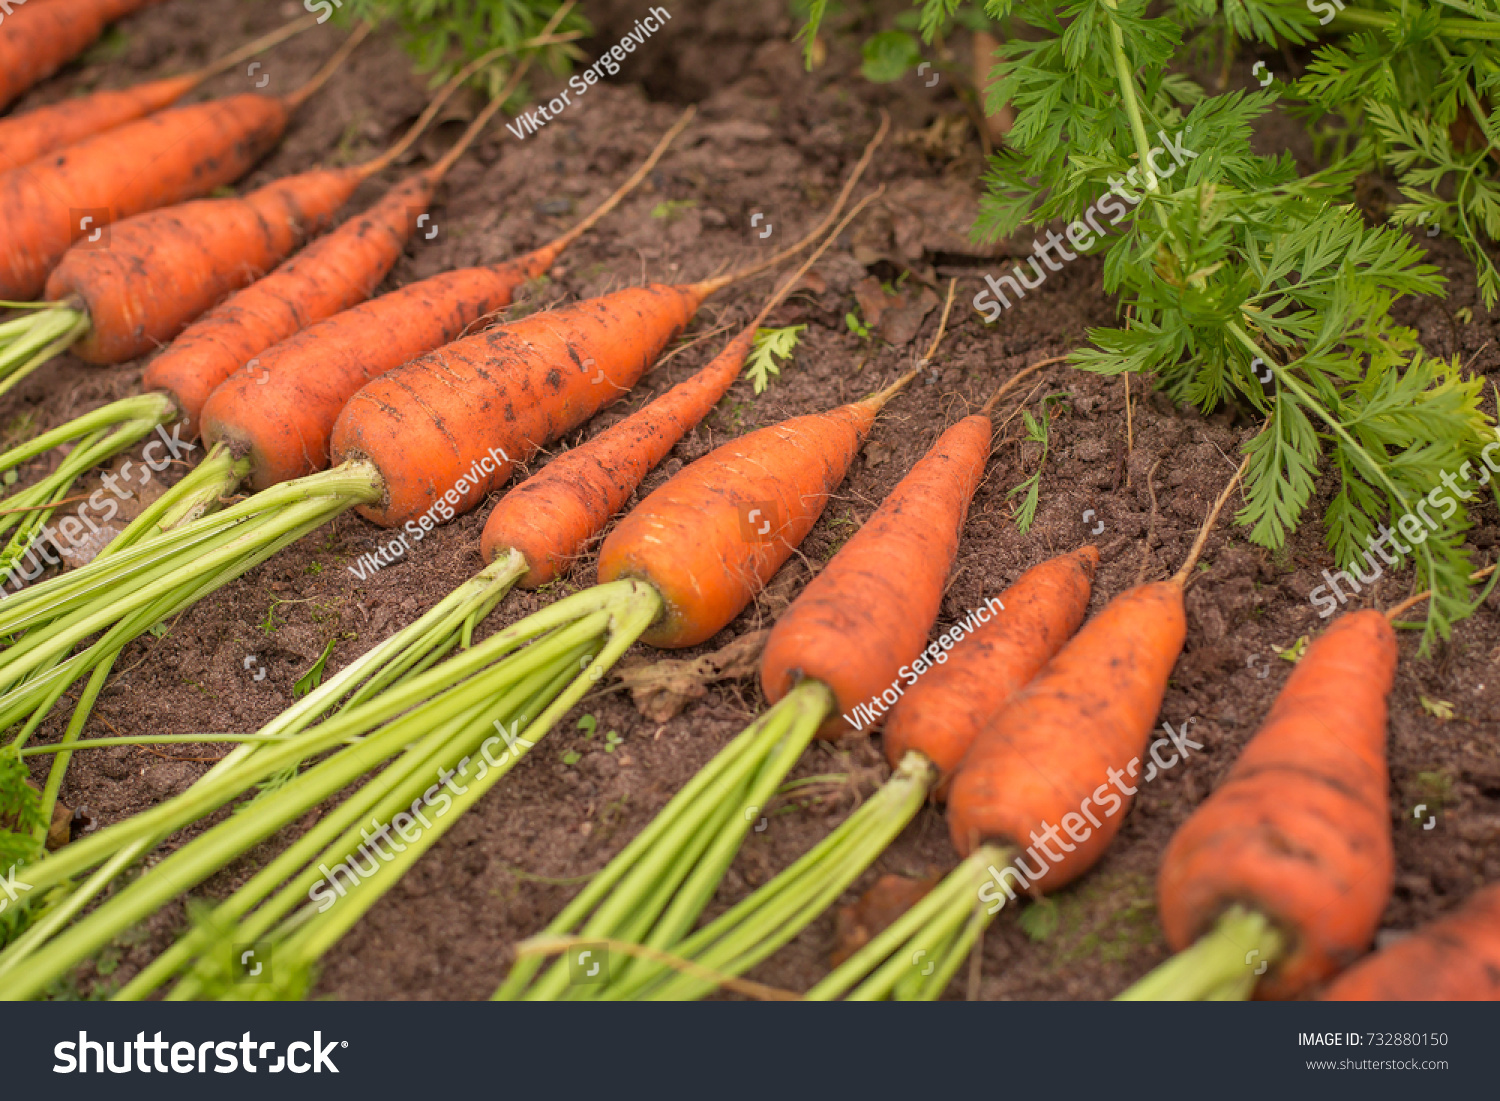 Harvest of fresh organic carrots #732880150